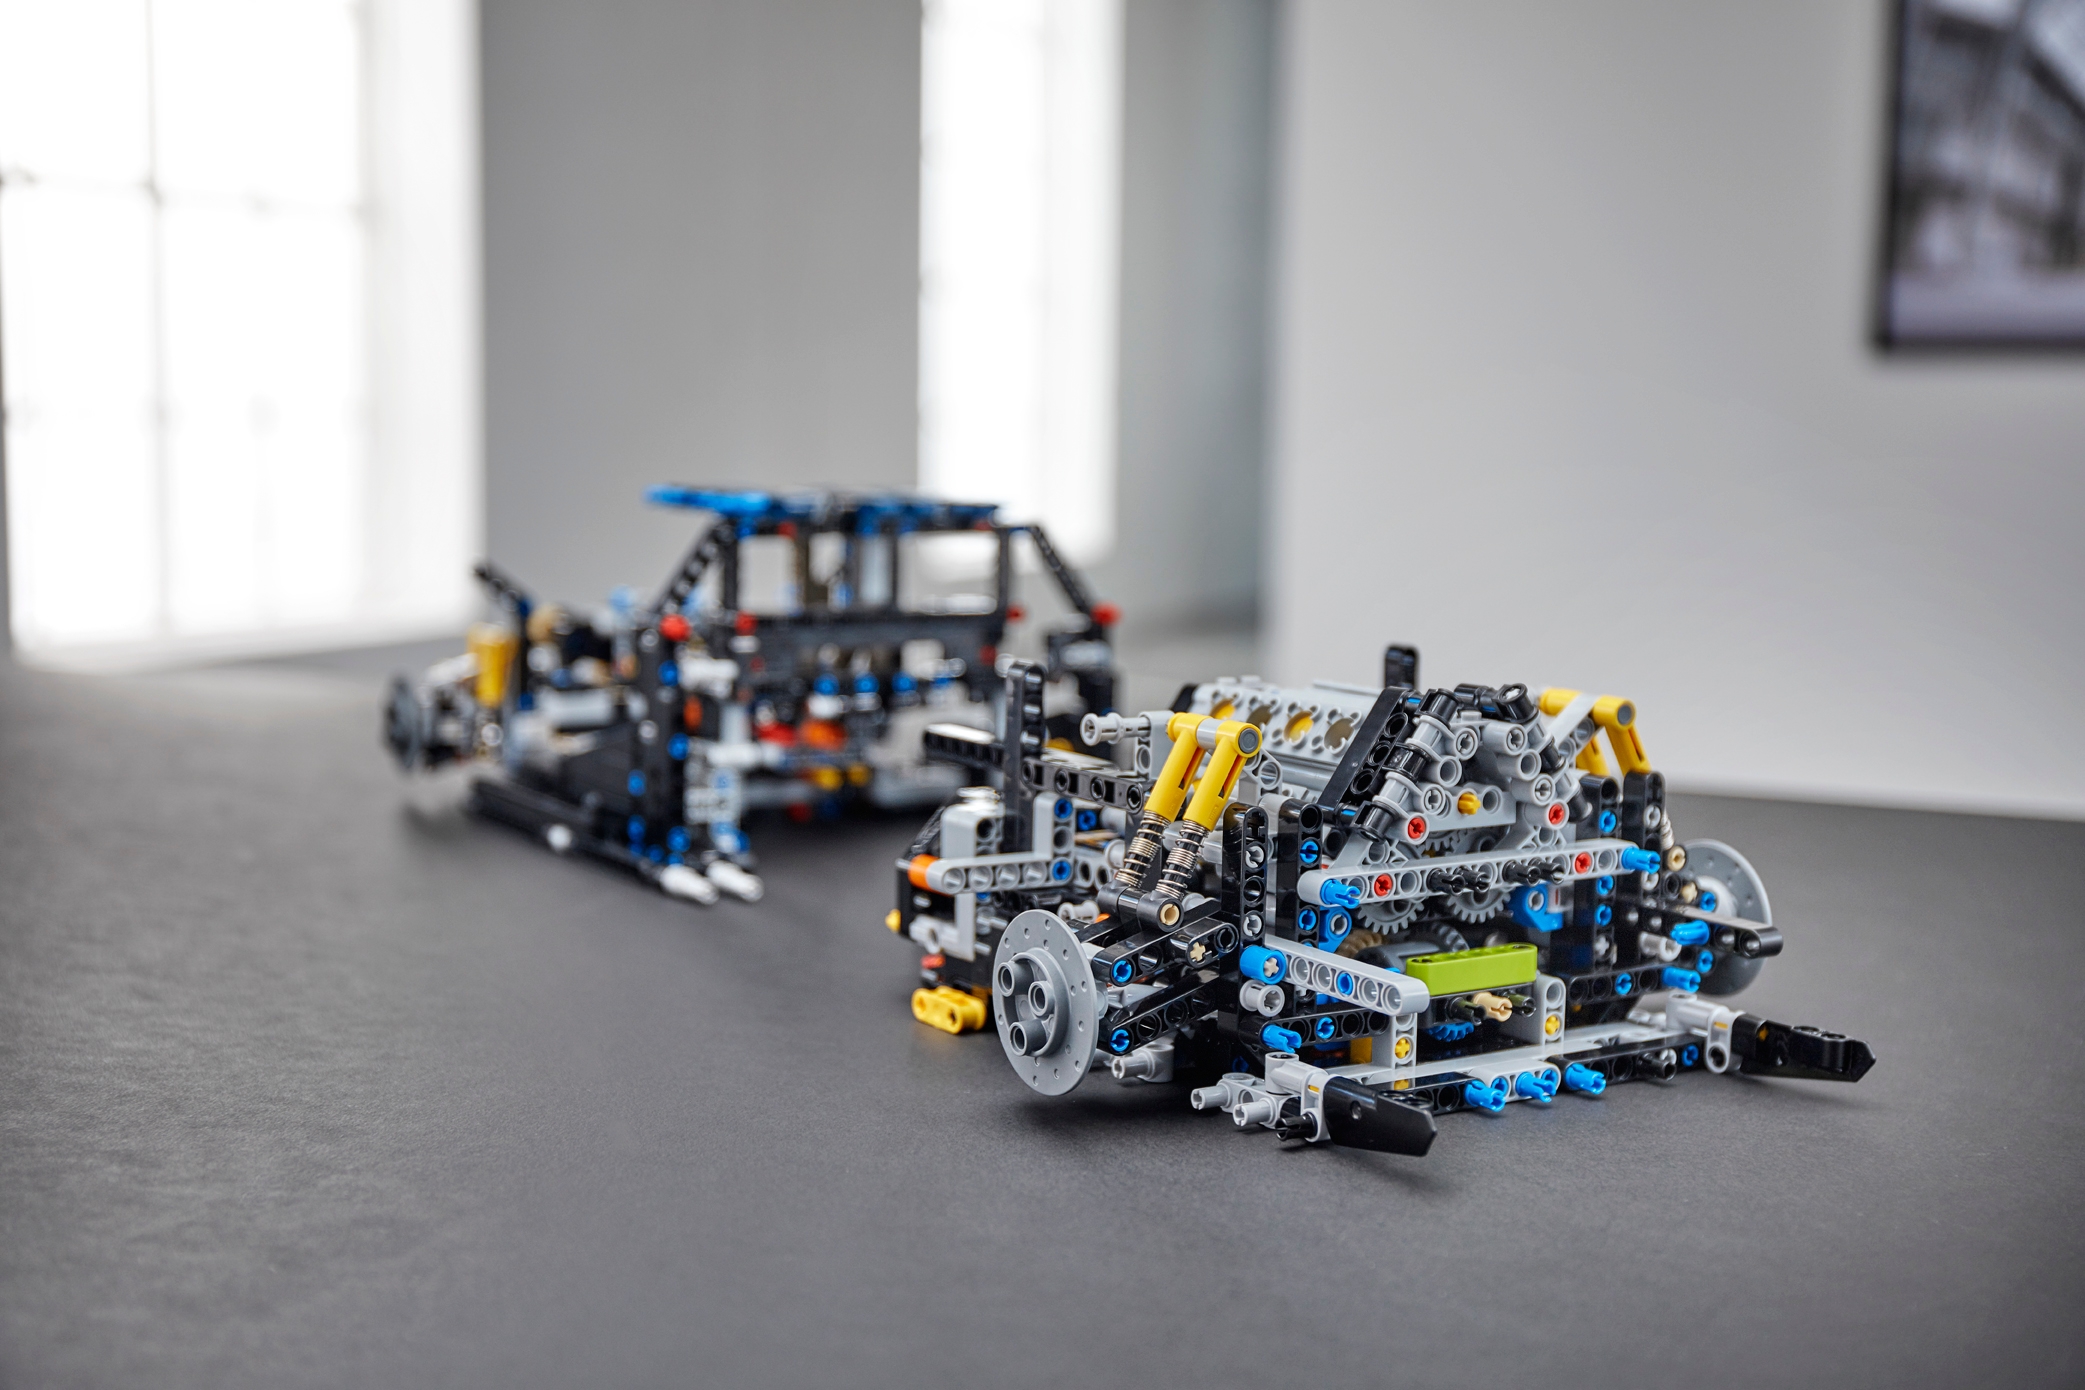 2018 Bugatti Chiron Lego Technic kit revealed - Autoblog